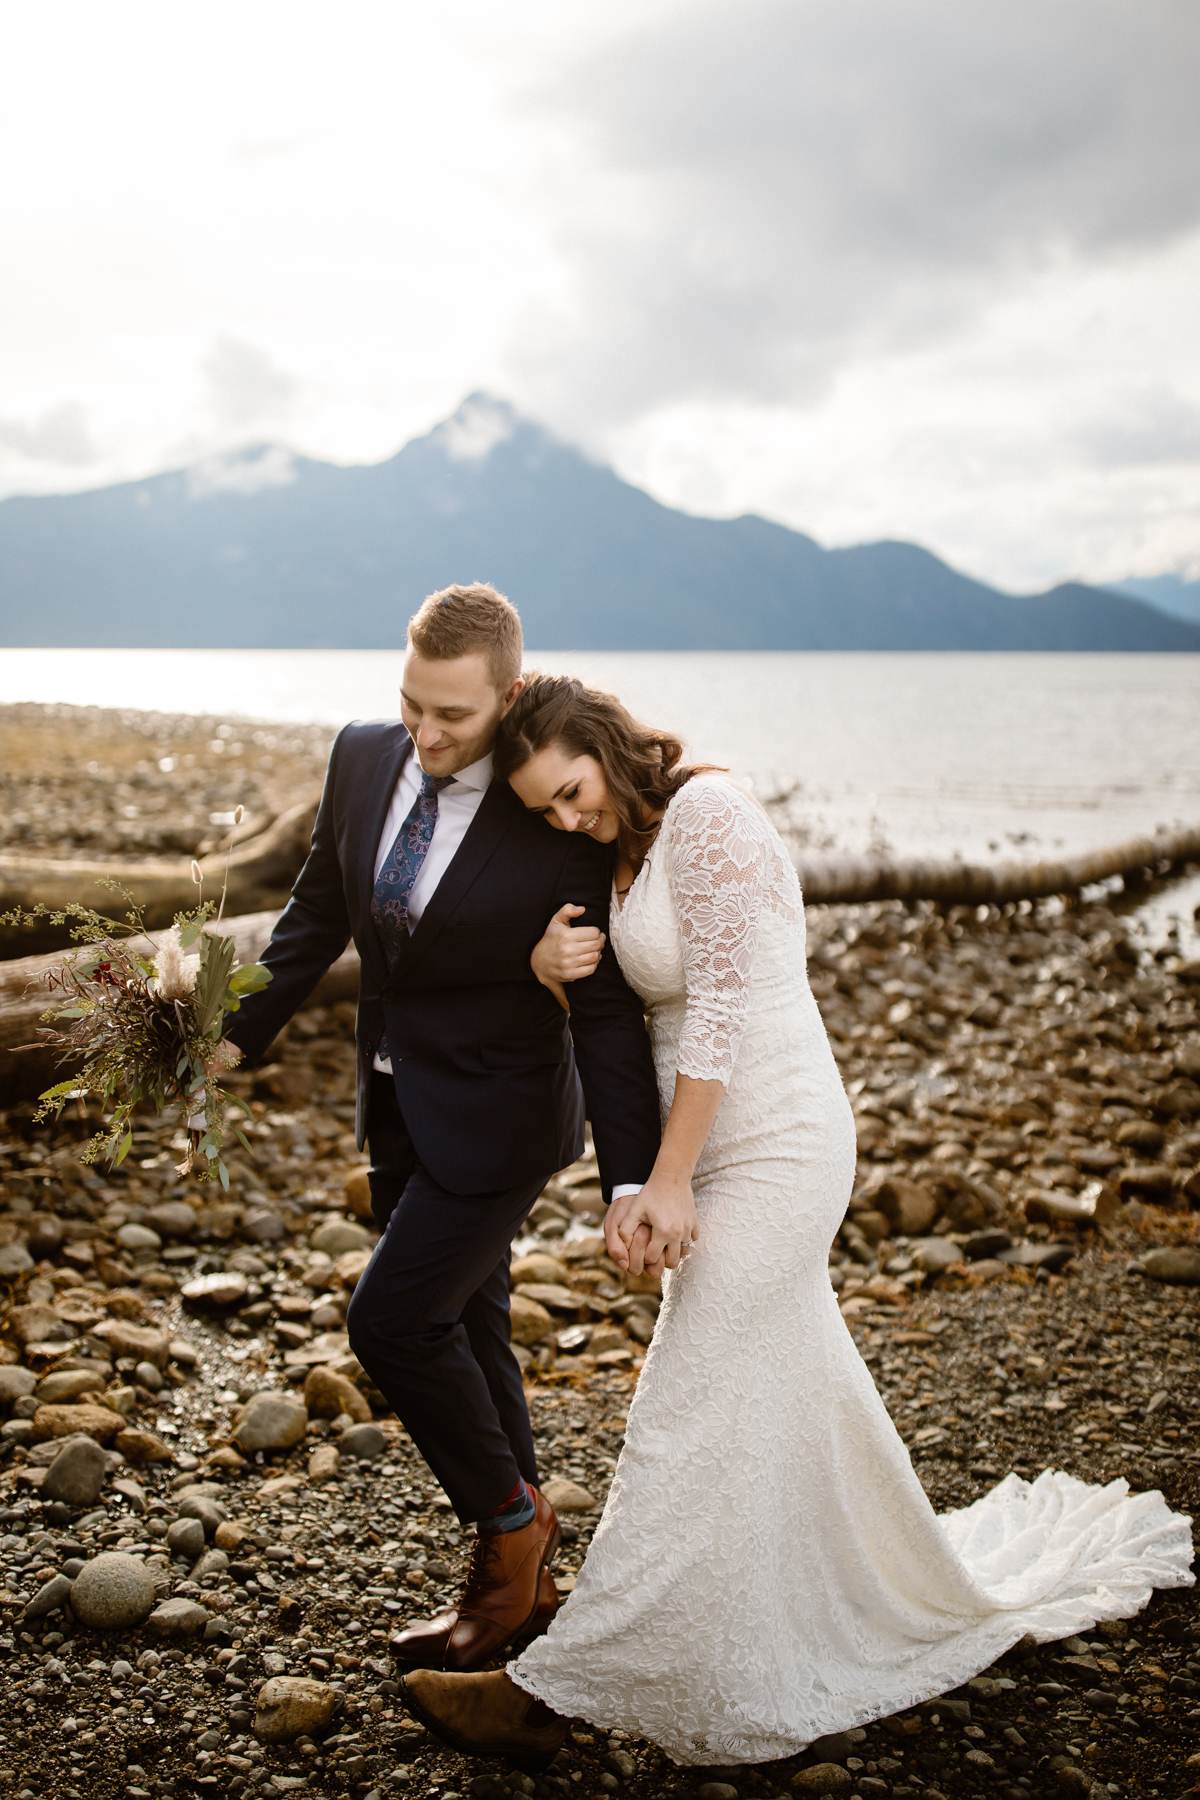 Squamish Wedding Photographers at an Adventurous Elopement - Image 25